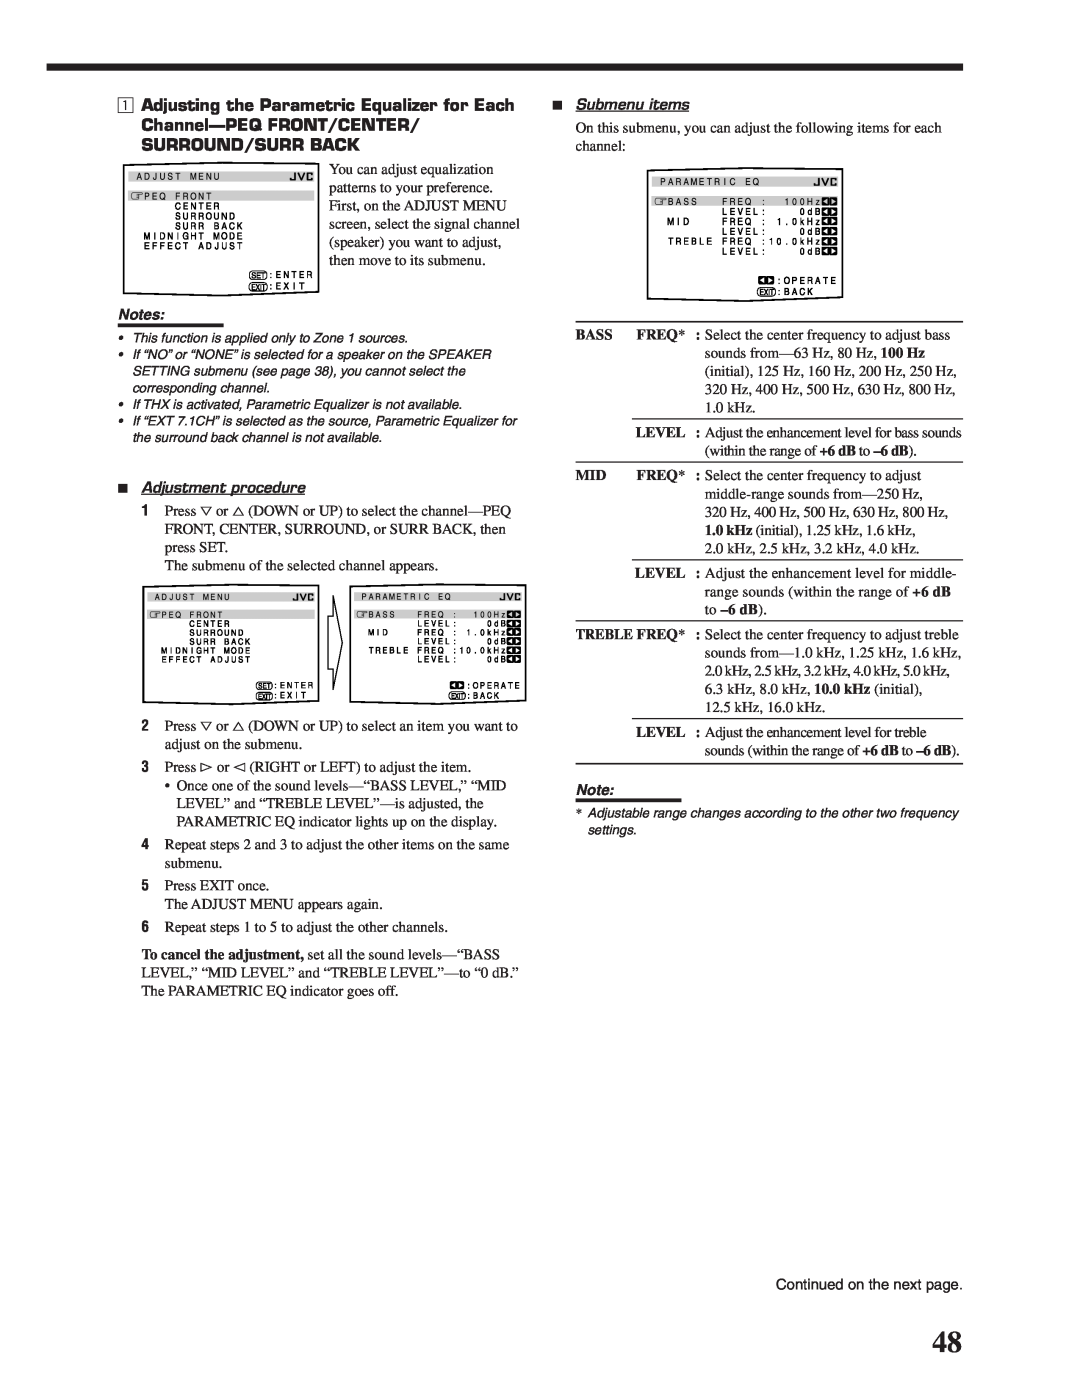 JVC RX-DP20VBK manual Notes, 7Adjustment procedure, 7Submenu items, Bass 